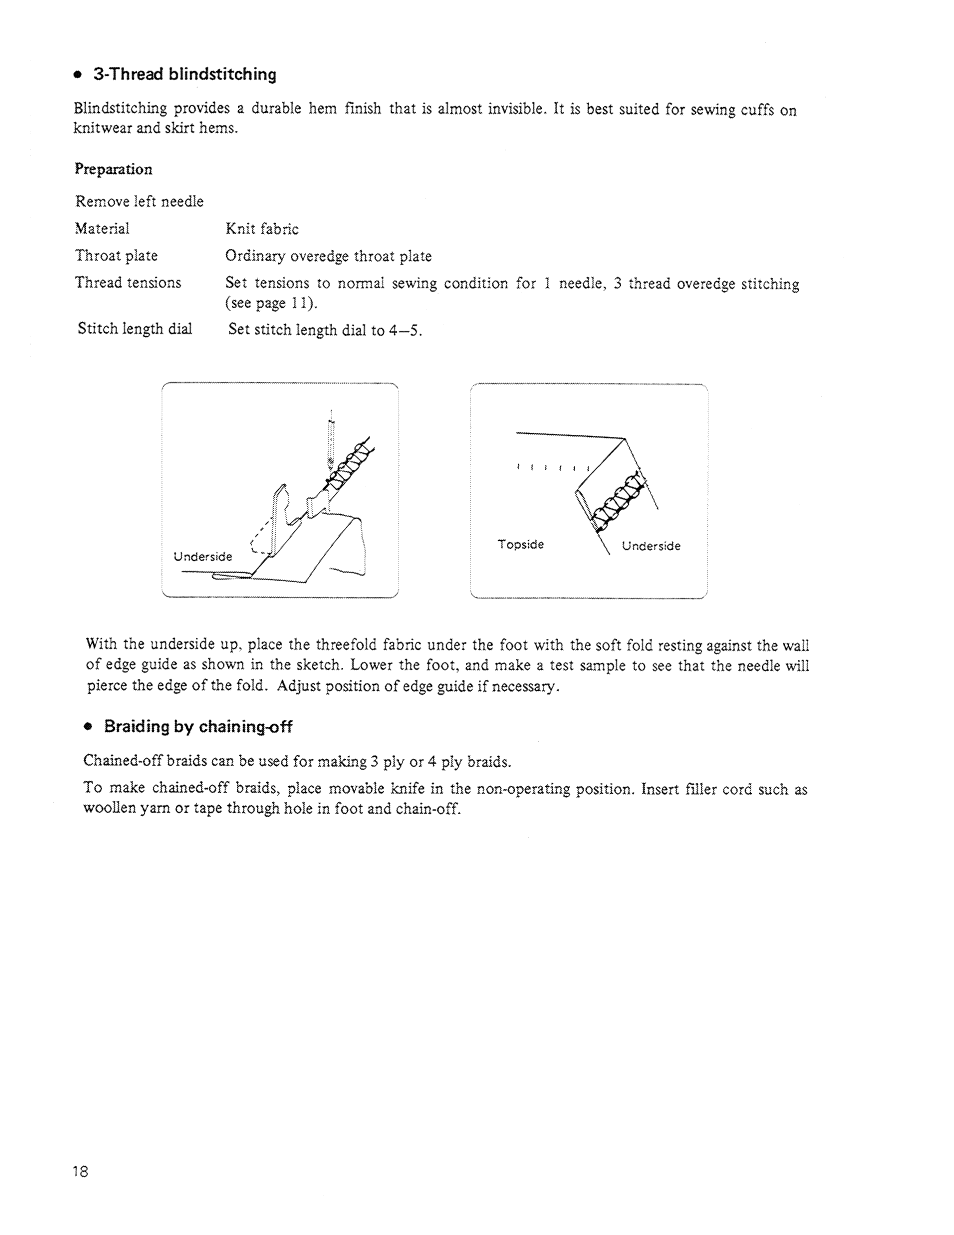 Thread blindstitching, Braiding by chainingoff, Braiding by chaining-off | SINGER 14U64A User Manual | Page 20 / 28